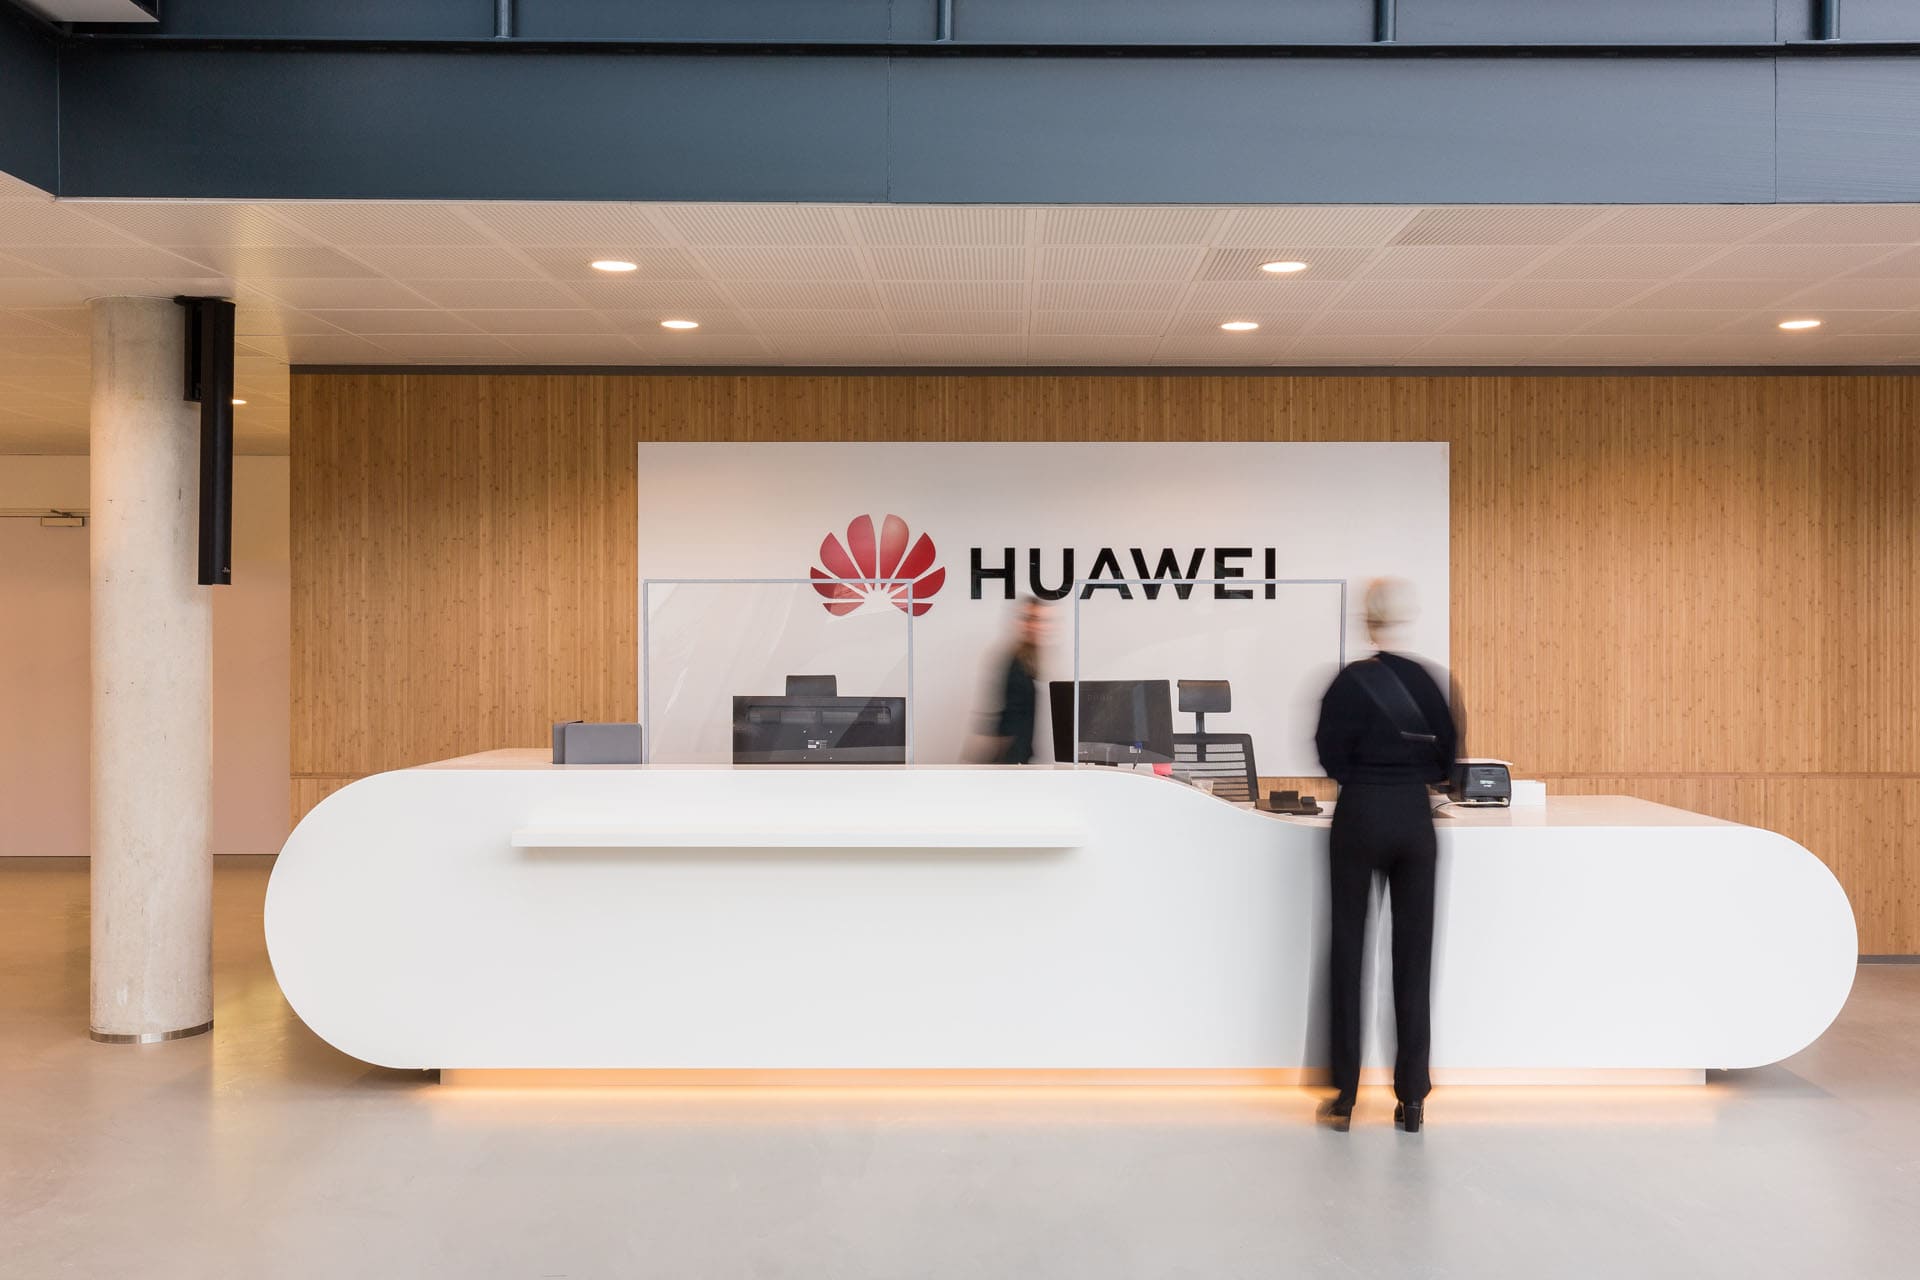 Featured image for “Huawei Rijswijk”